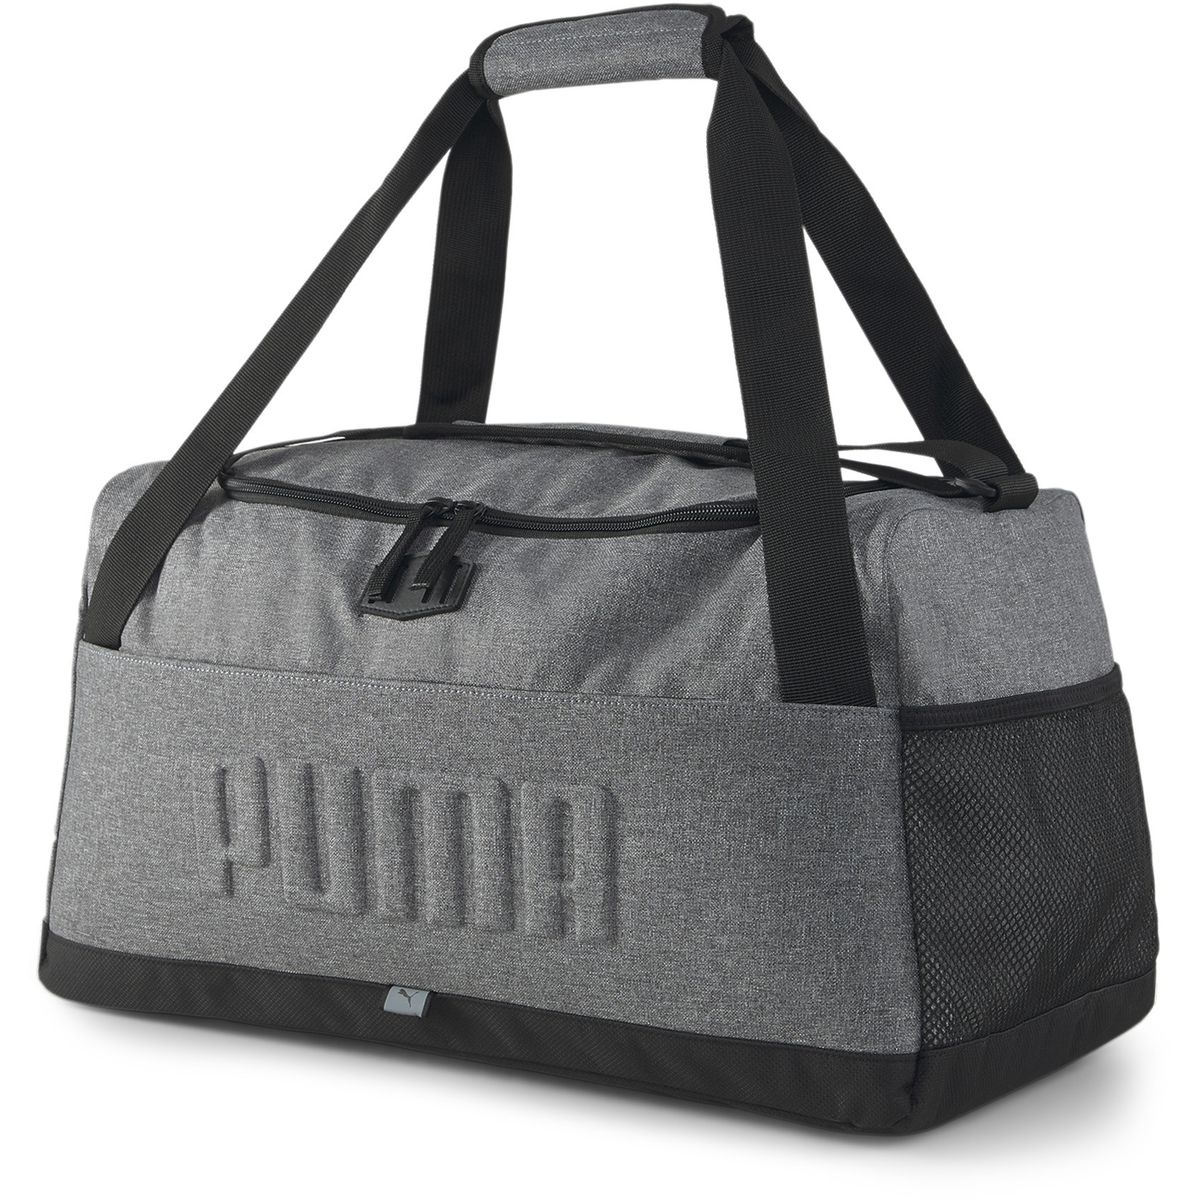 Puma S Sports Bag S Sporttasche